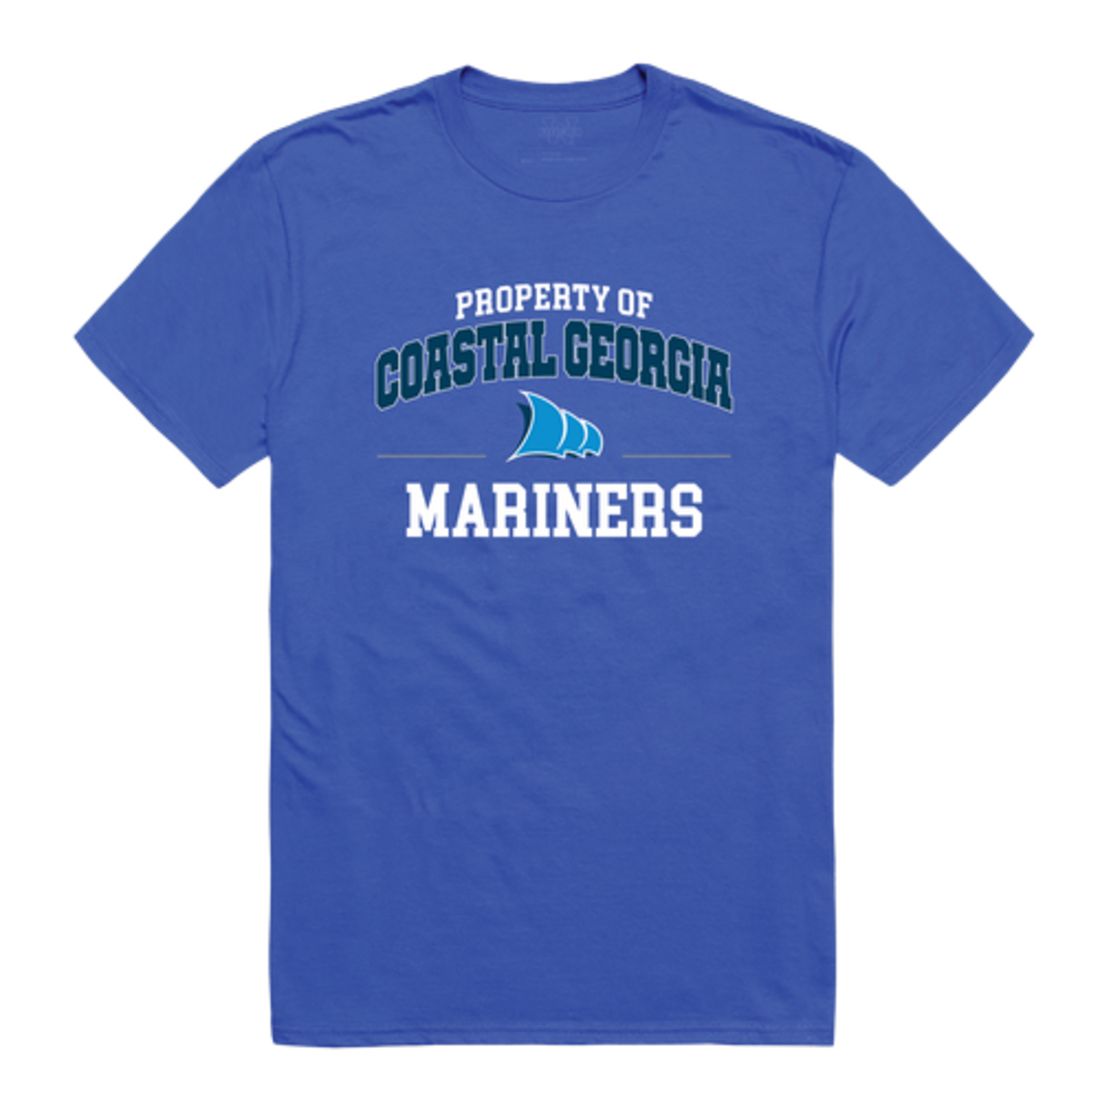 College of Coastal Georgia Mariners Property T-Shirt Tee